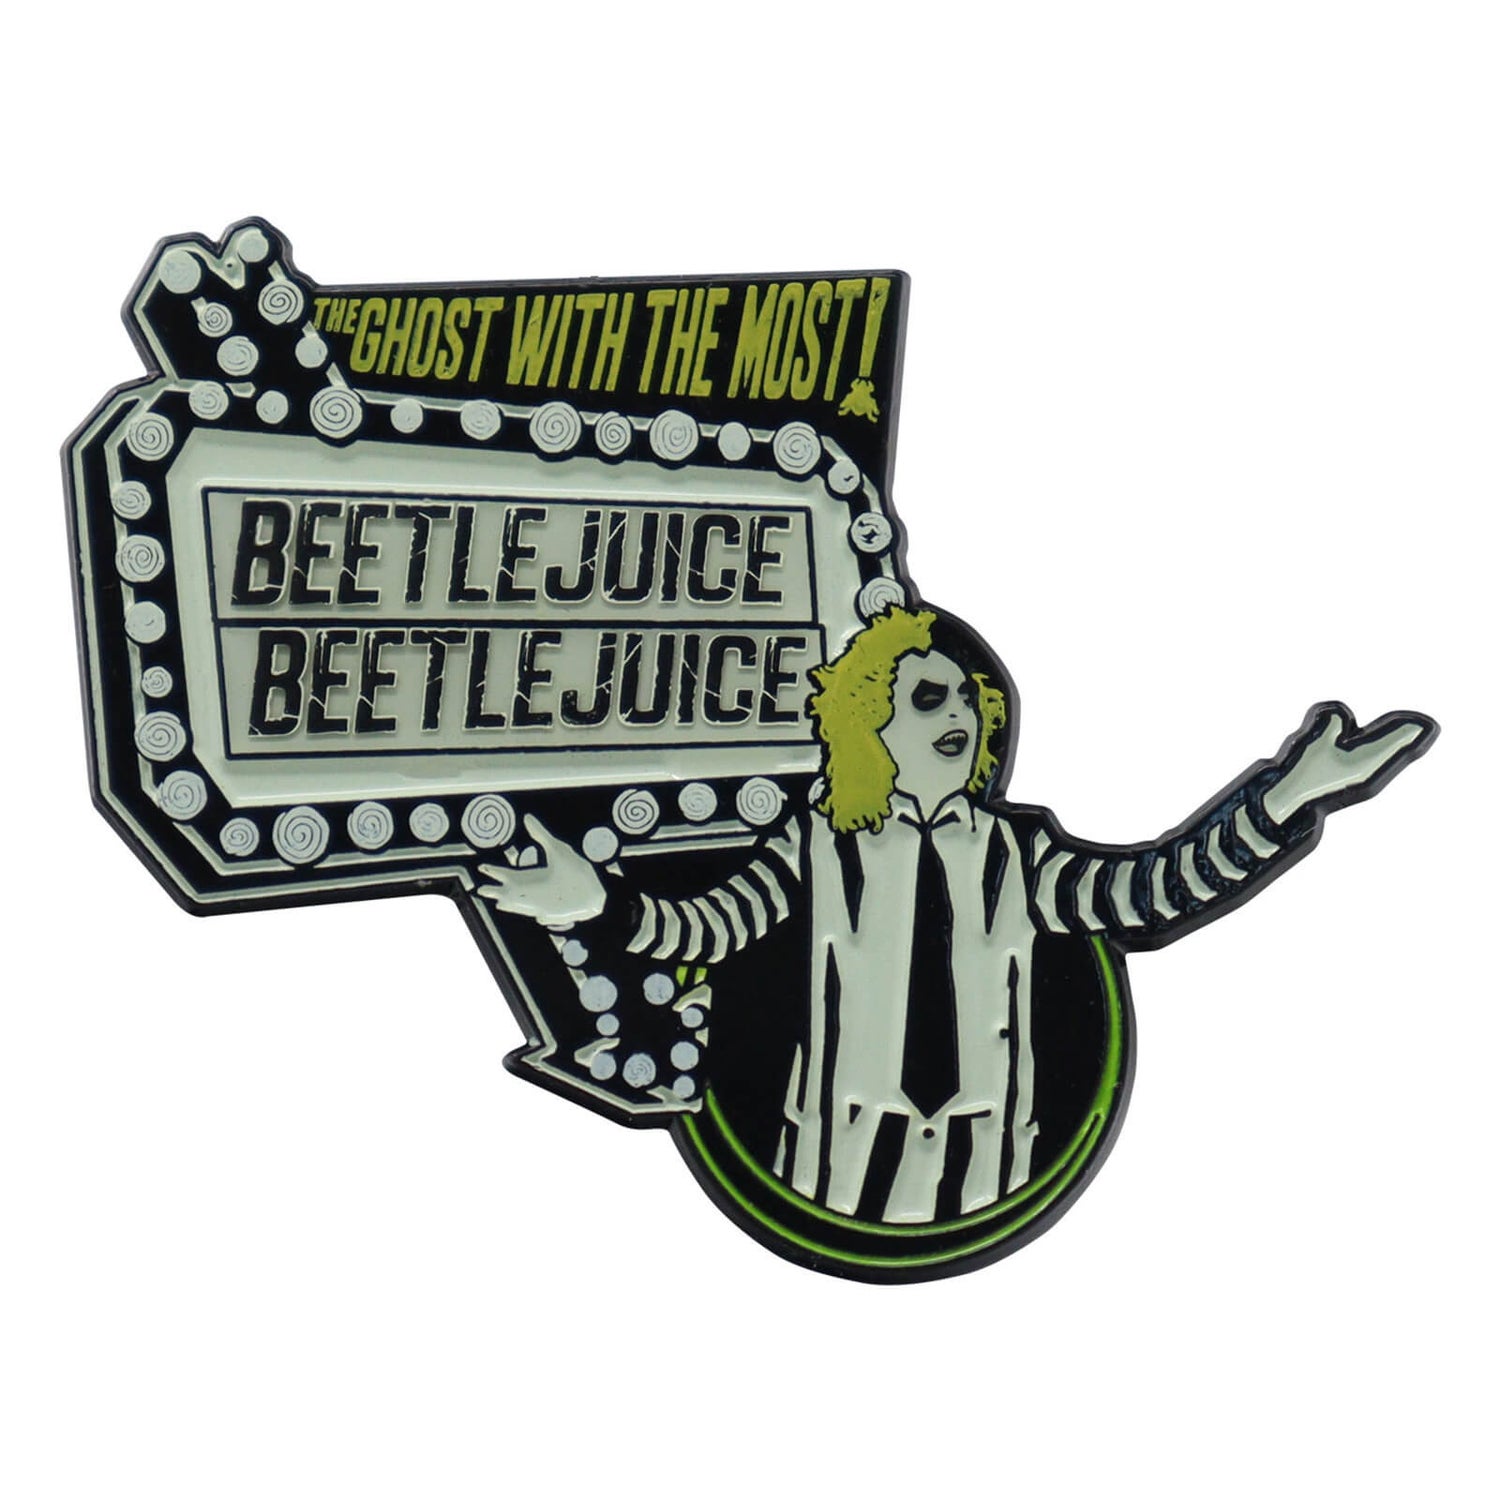 Fanattik Beetlejuice Limited Edition Pin